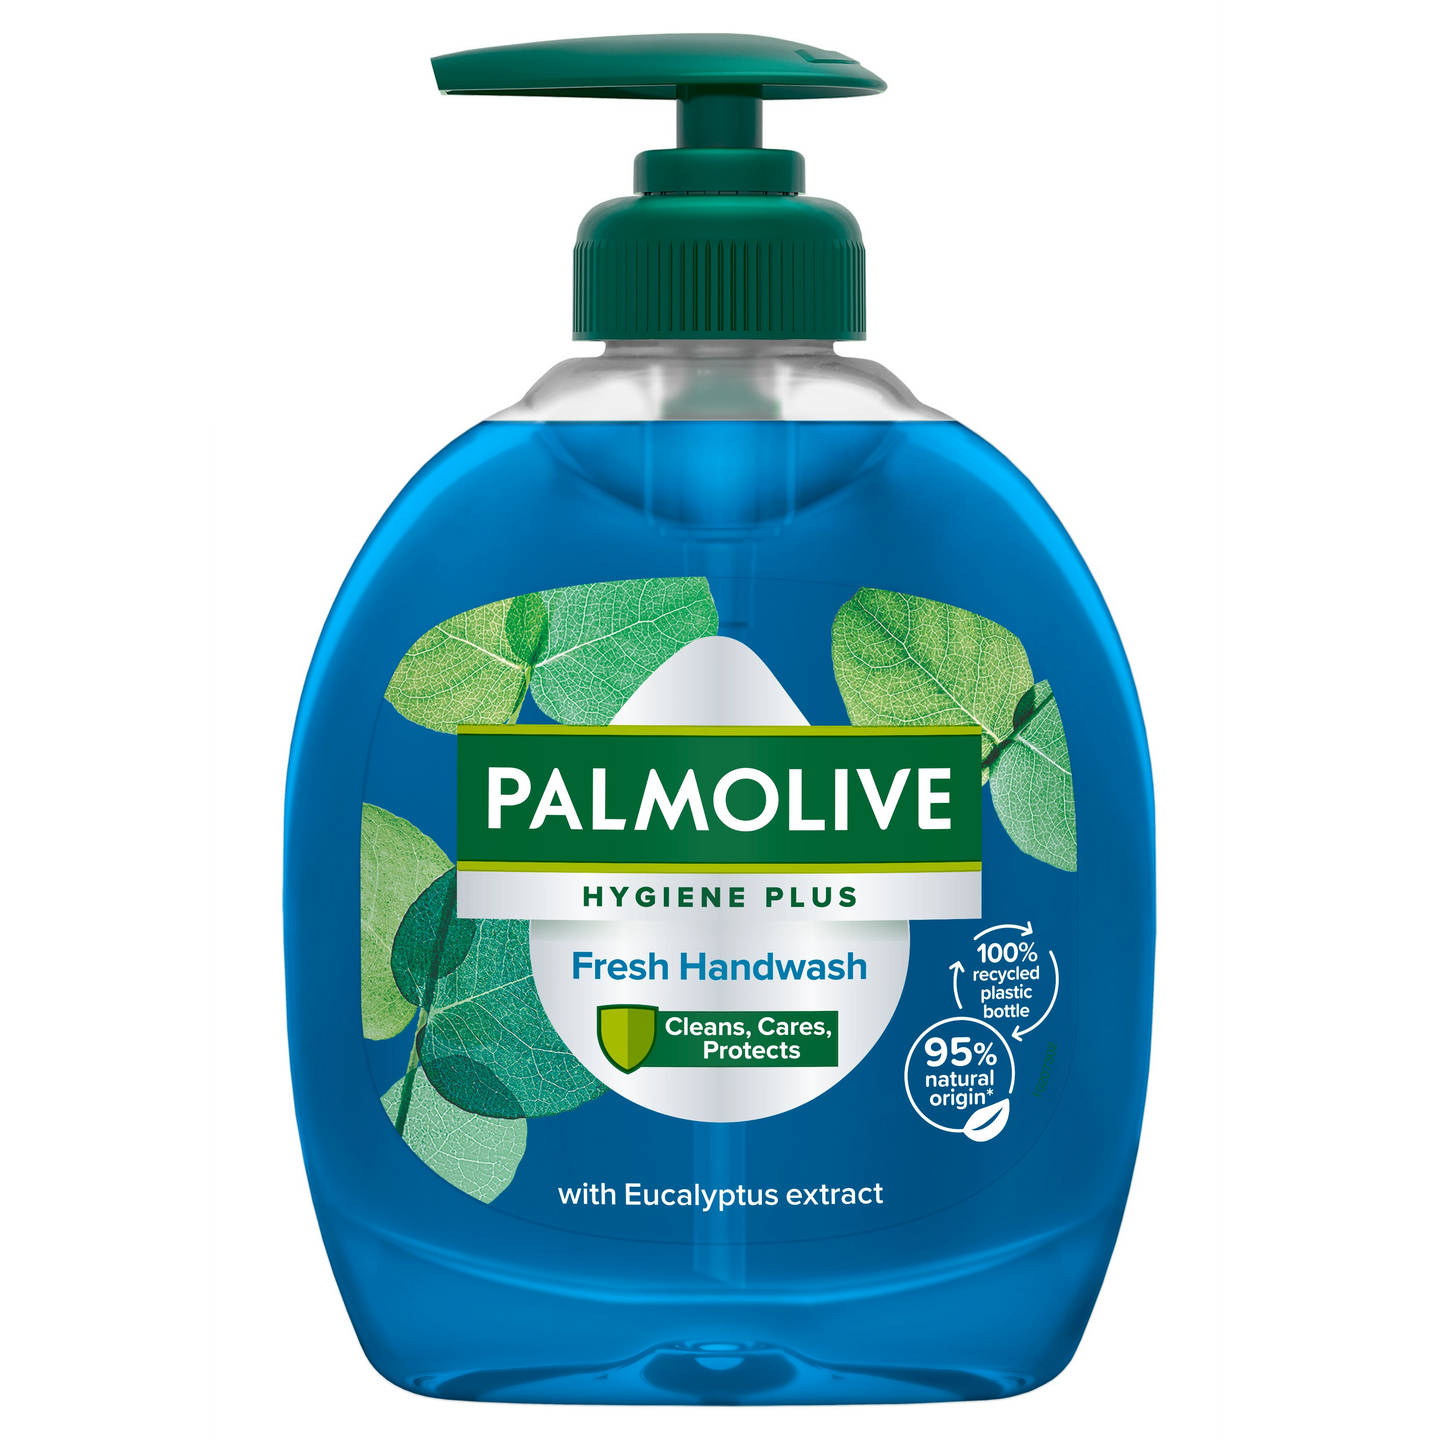 Palmolive Hygiene Plus Fresh nestesaippua 300ml